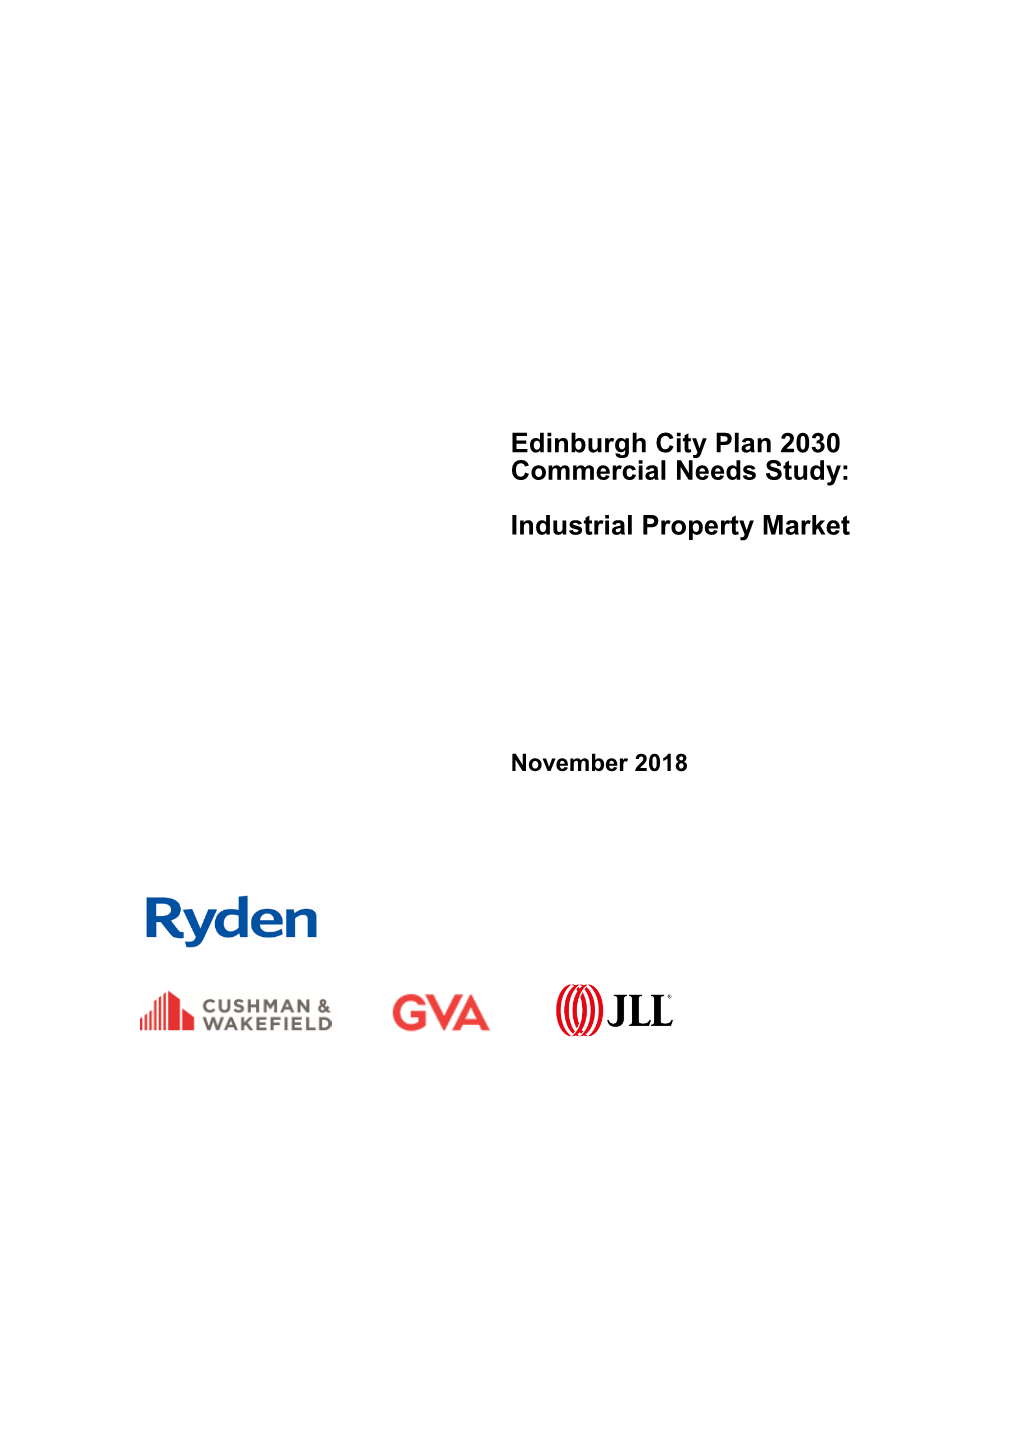 Edinburgh City Plan 2030 Commercial Needs Study: Industrial Property Market November 2018